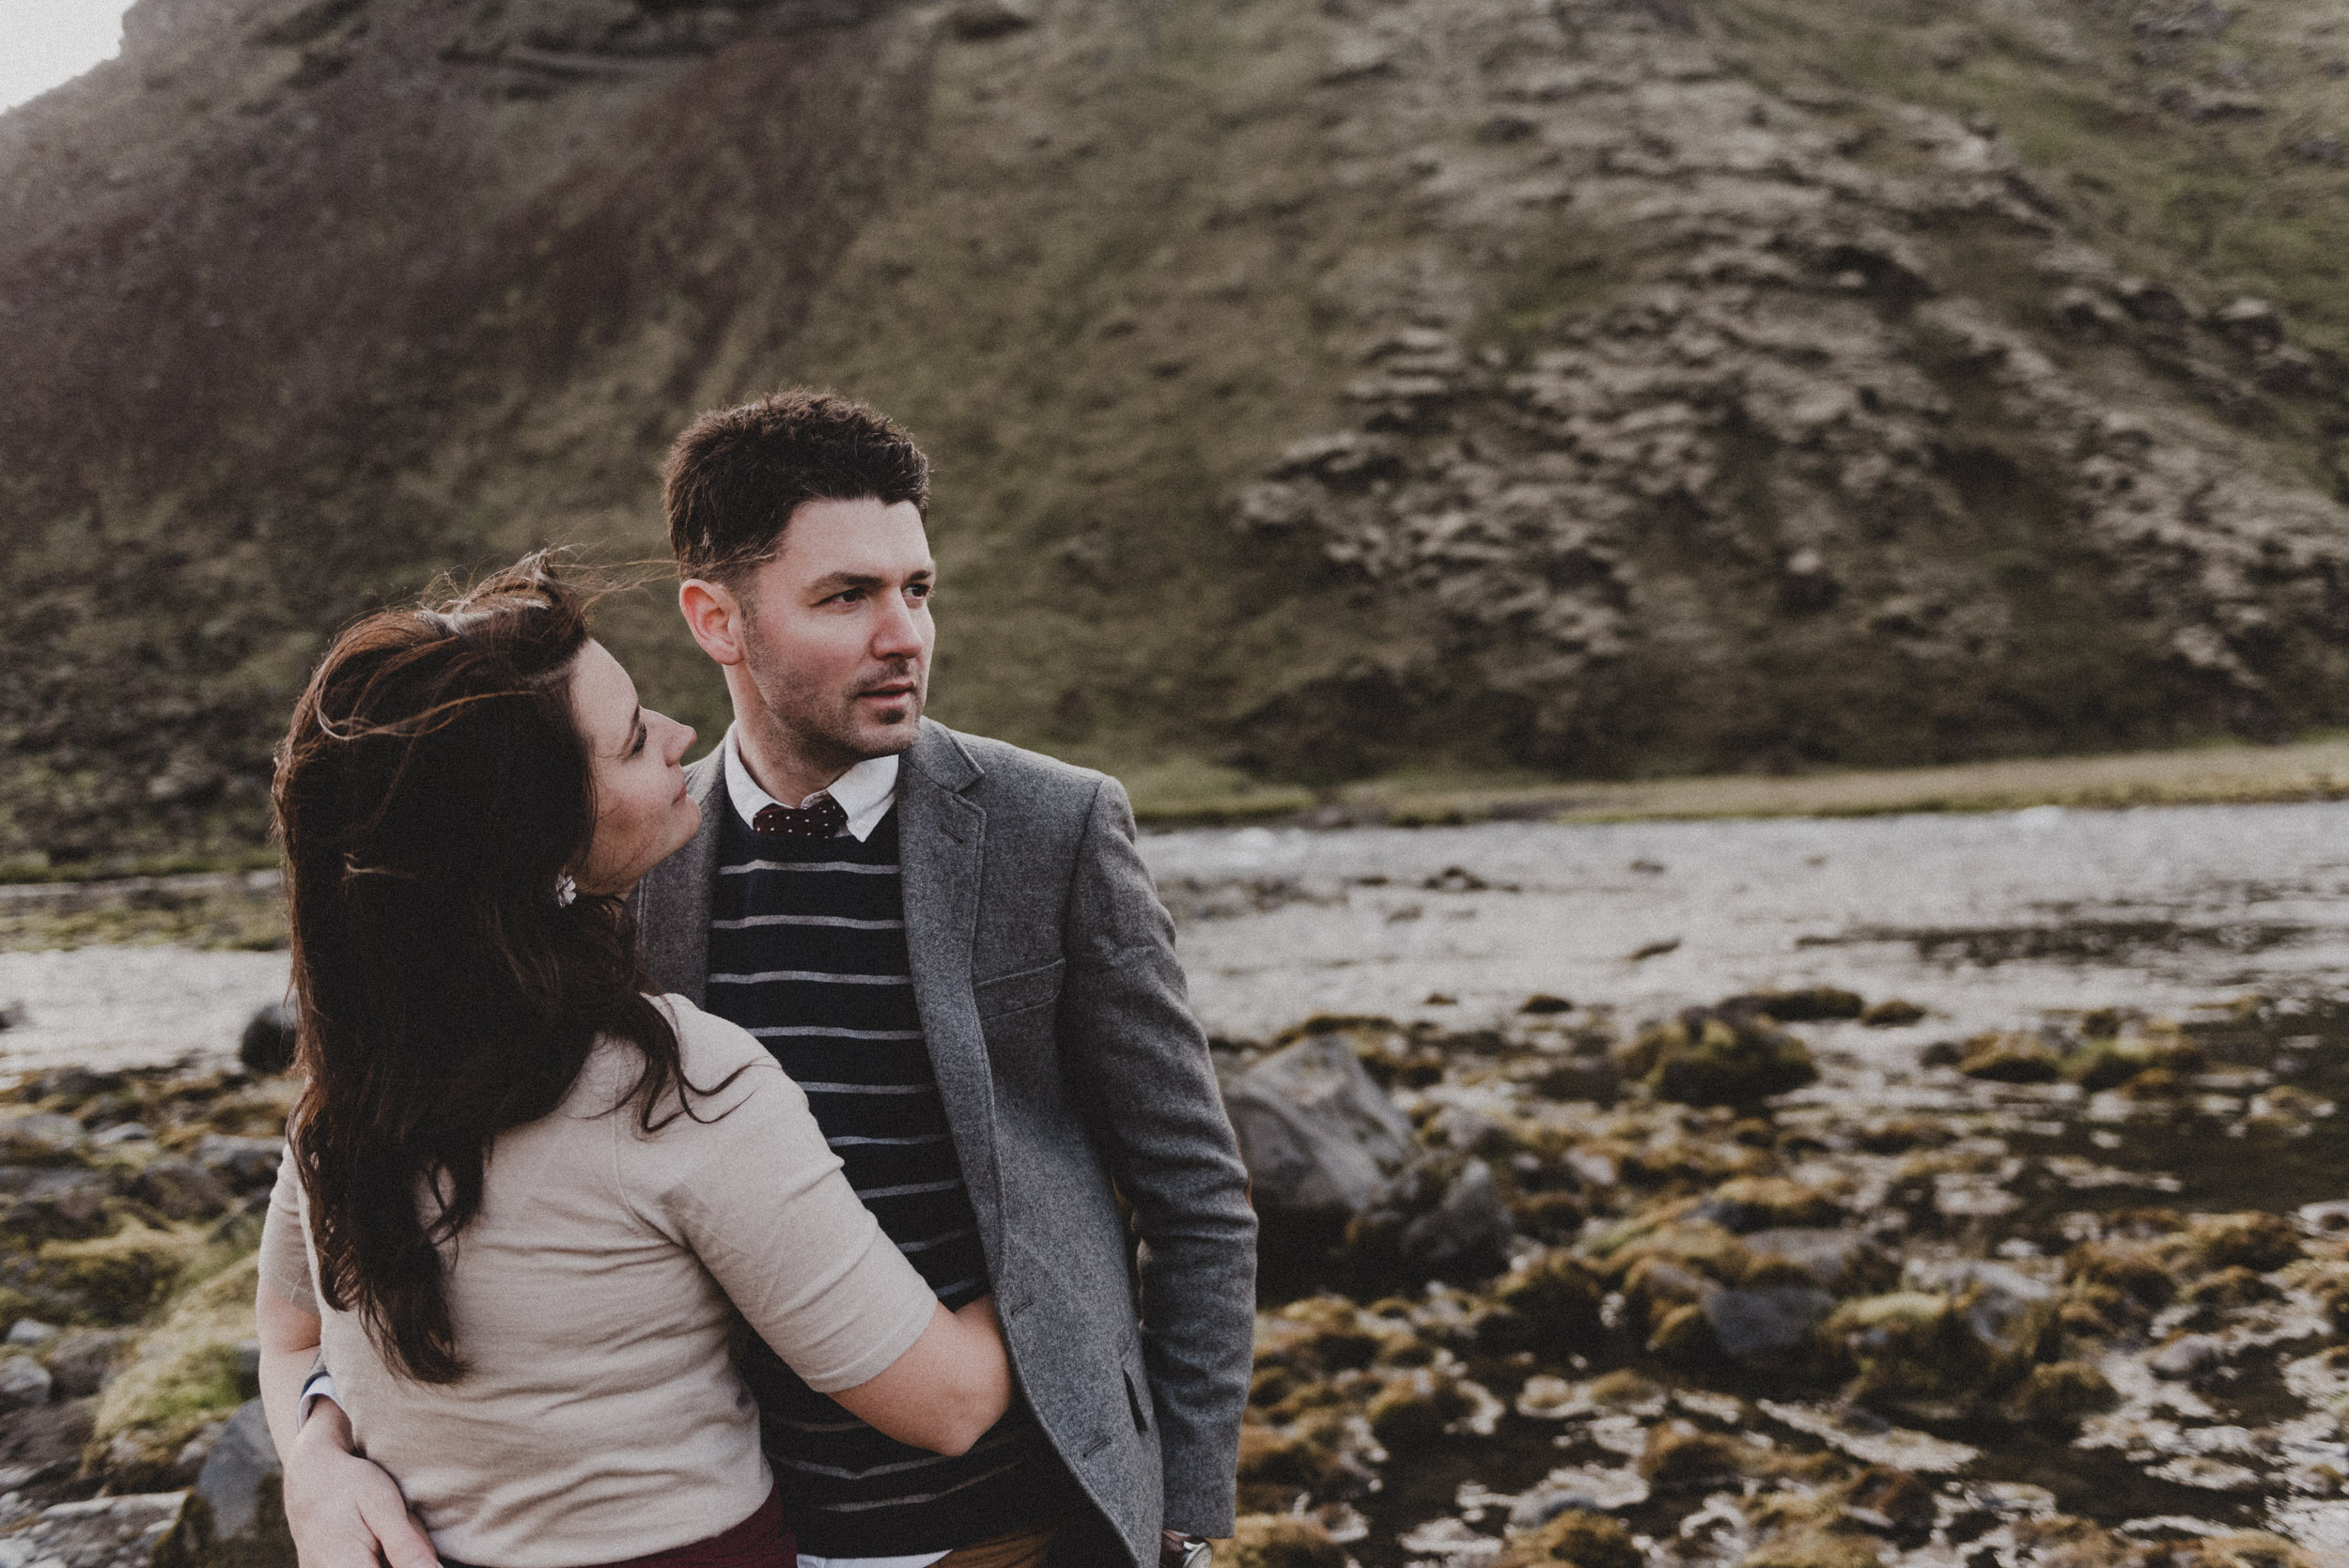 Copy of Iceland honeymoon session